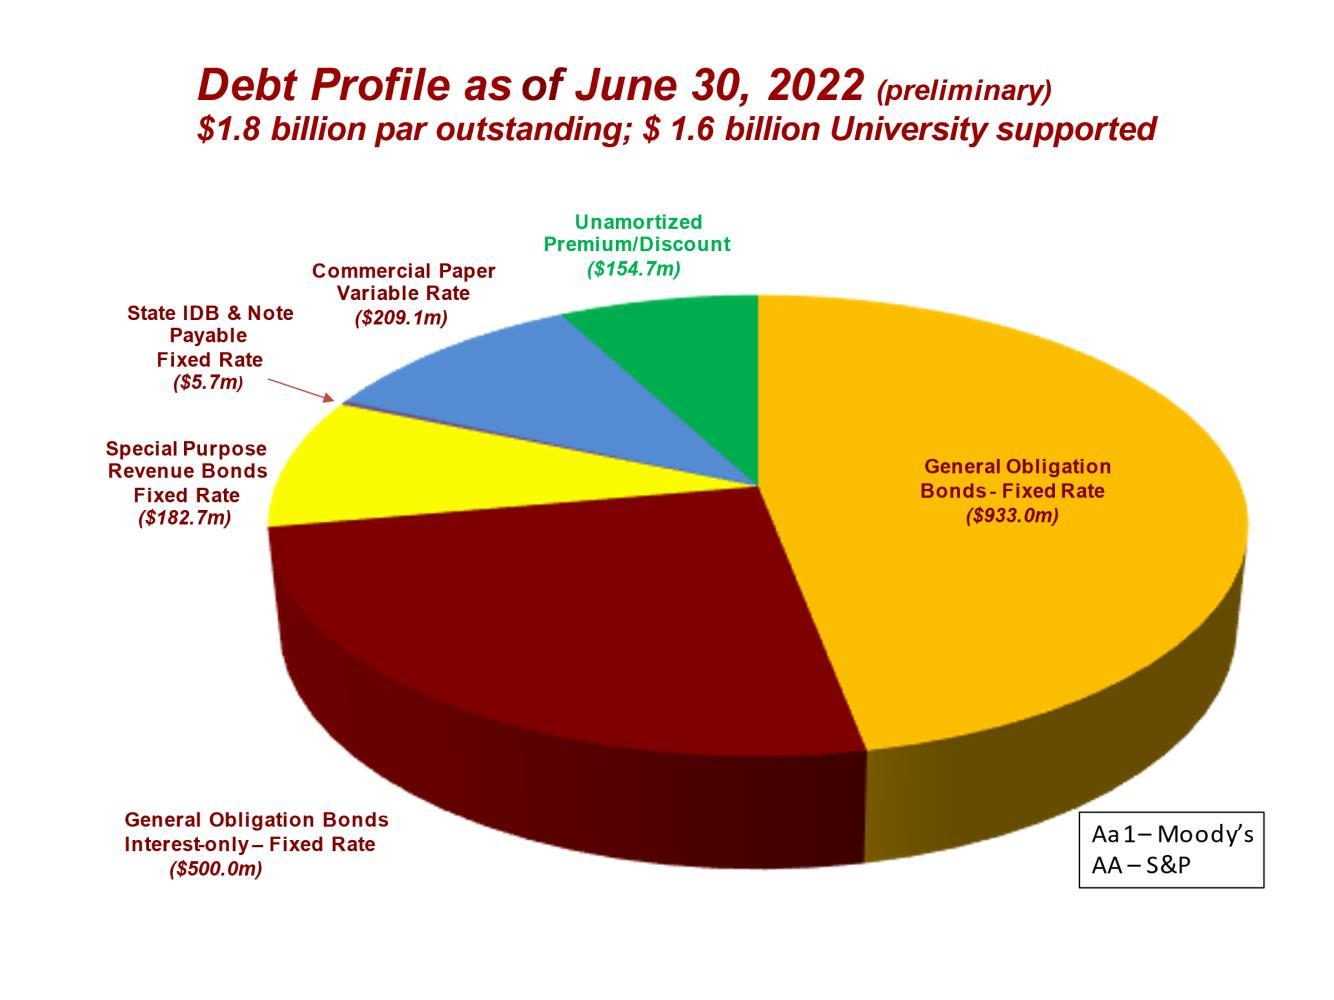 Debt profile as of June 30, 2022 showing types of debt making up $1.8 billion par outstanding debt, $1.6B U-supported.